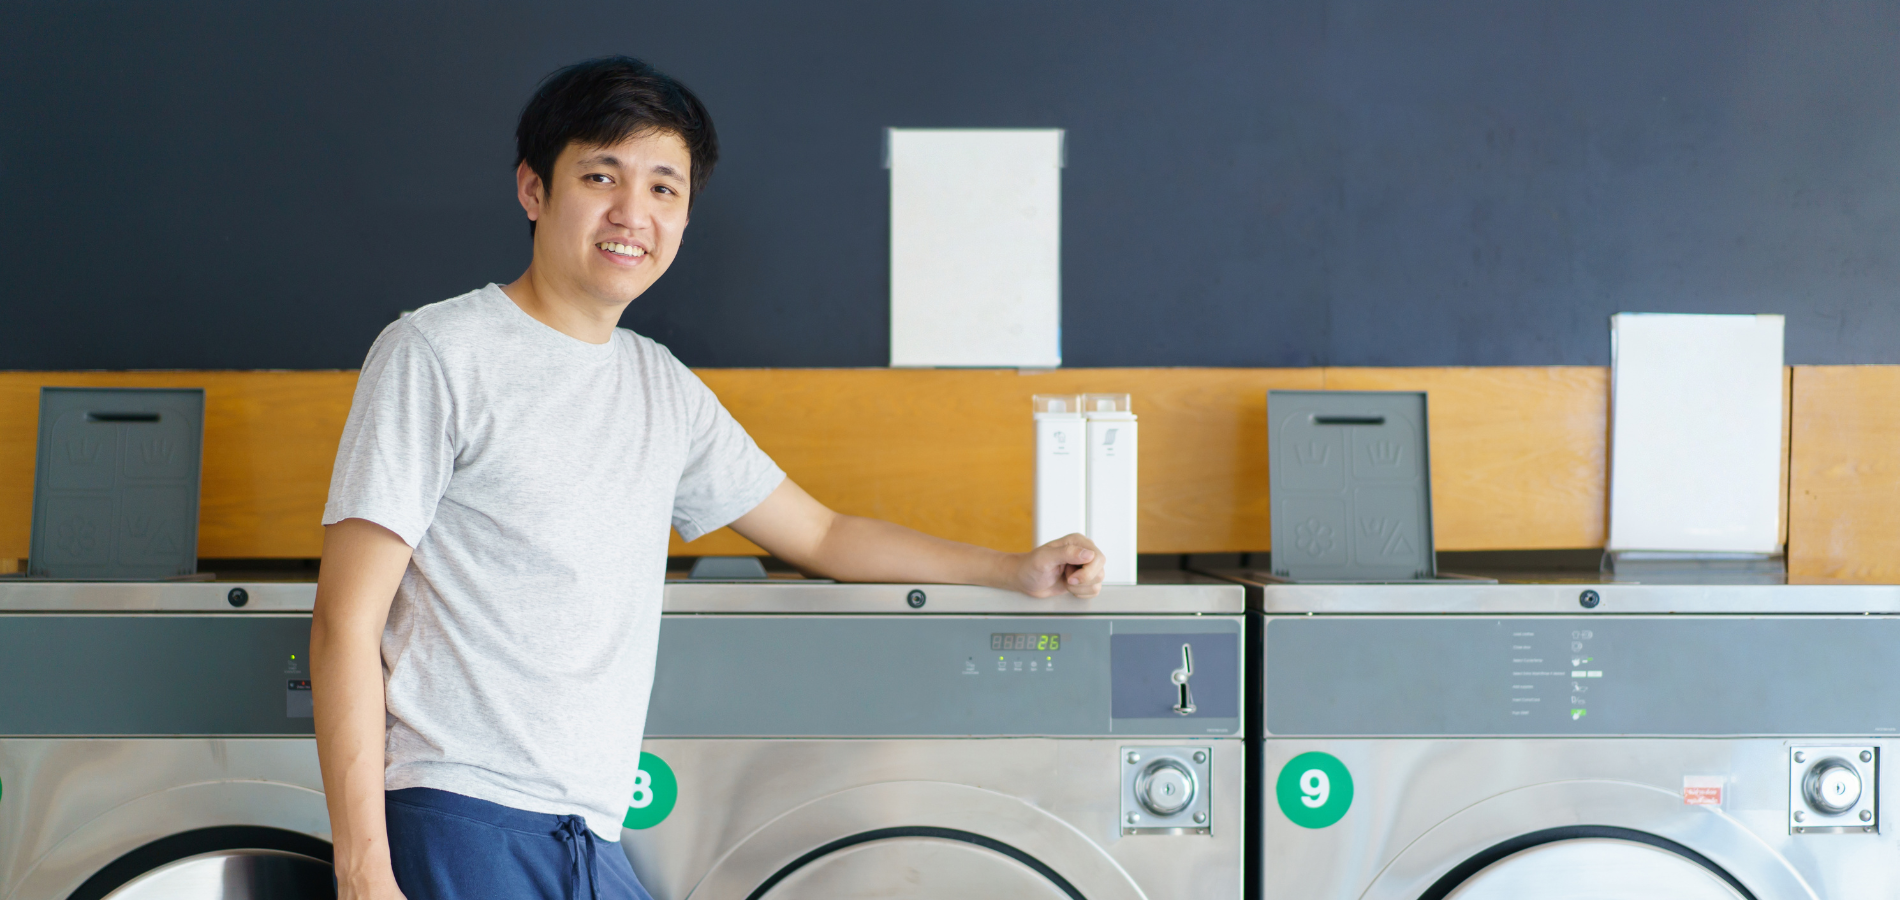 How To Choose A Good Washing Machine